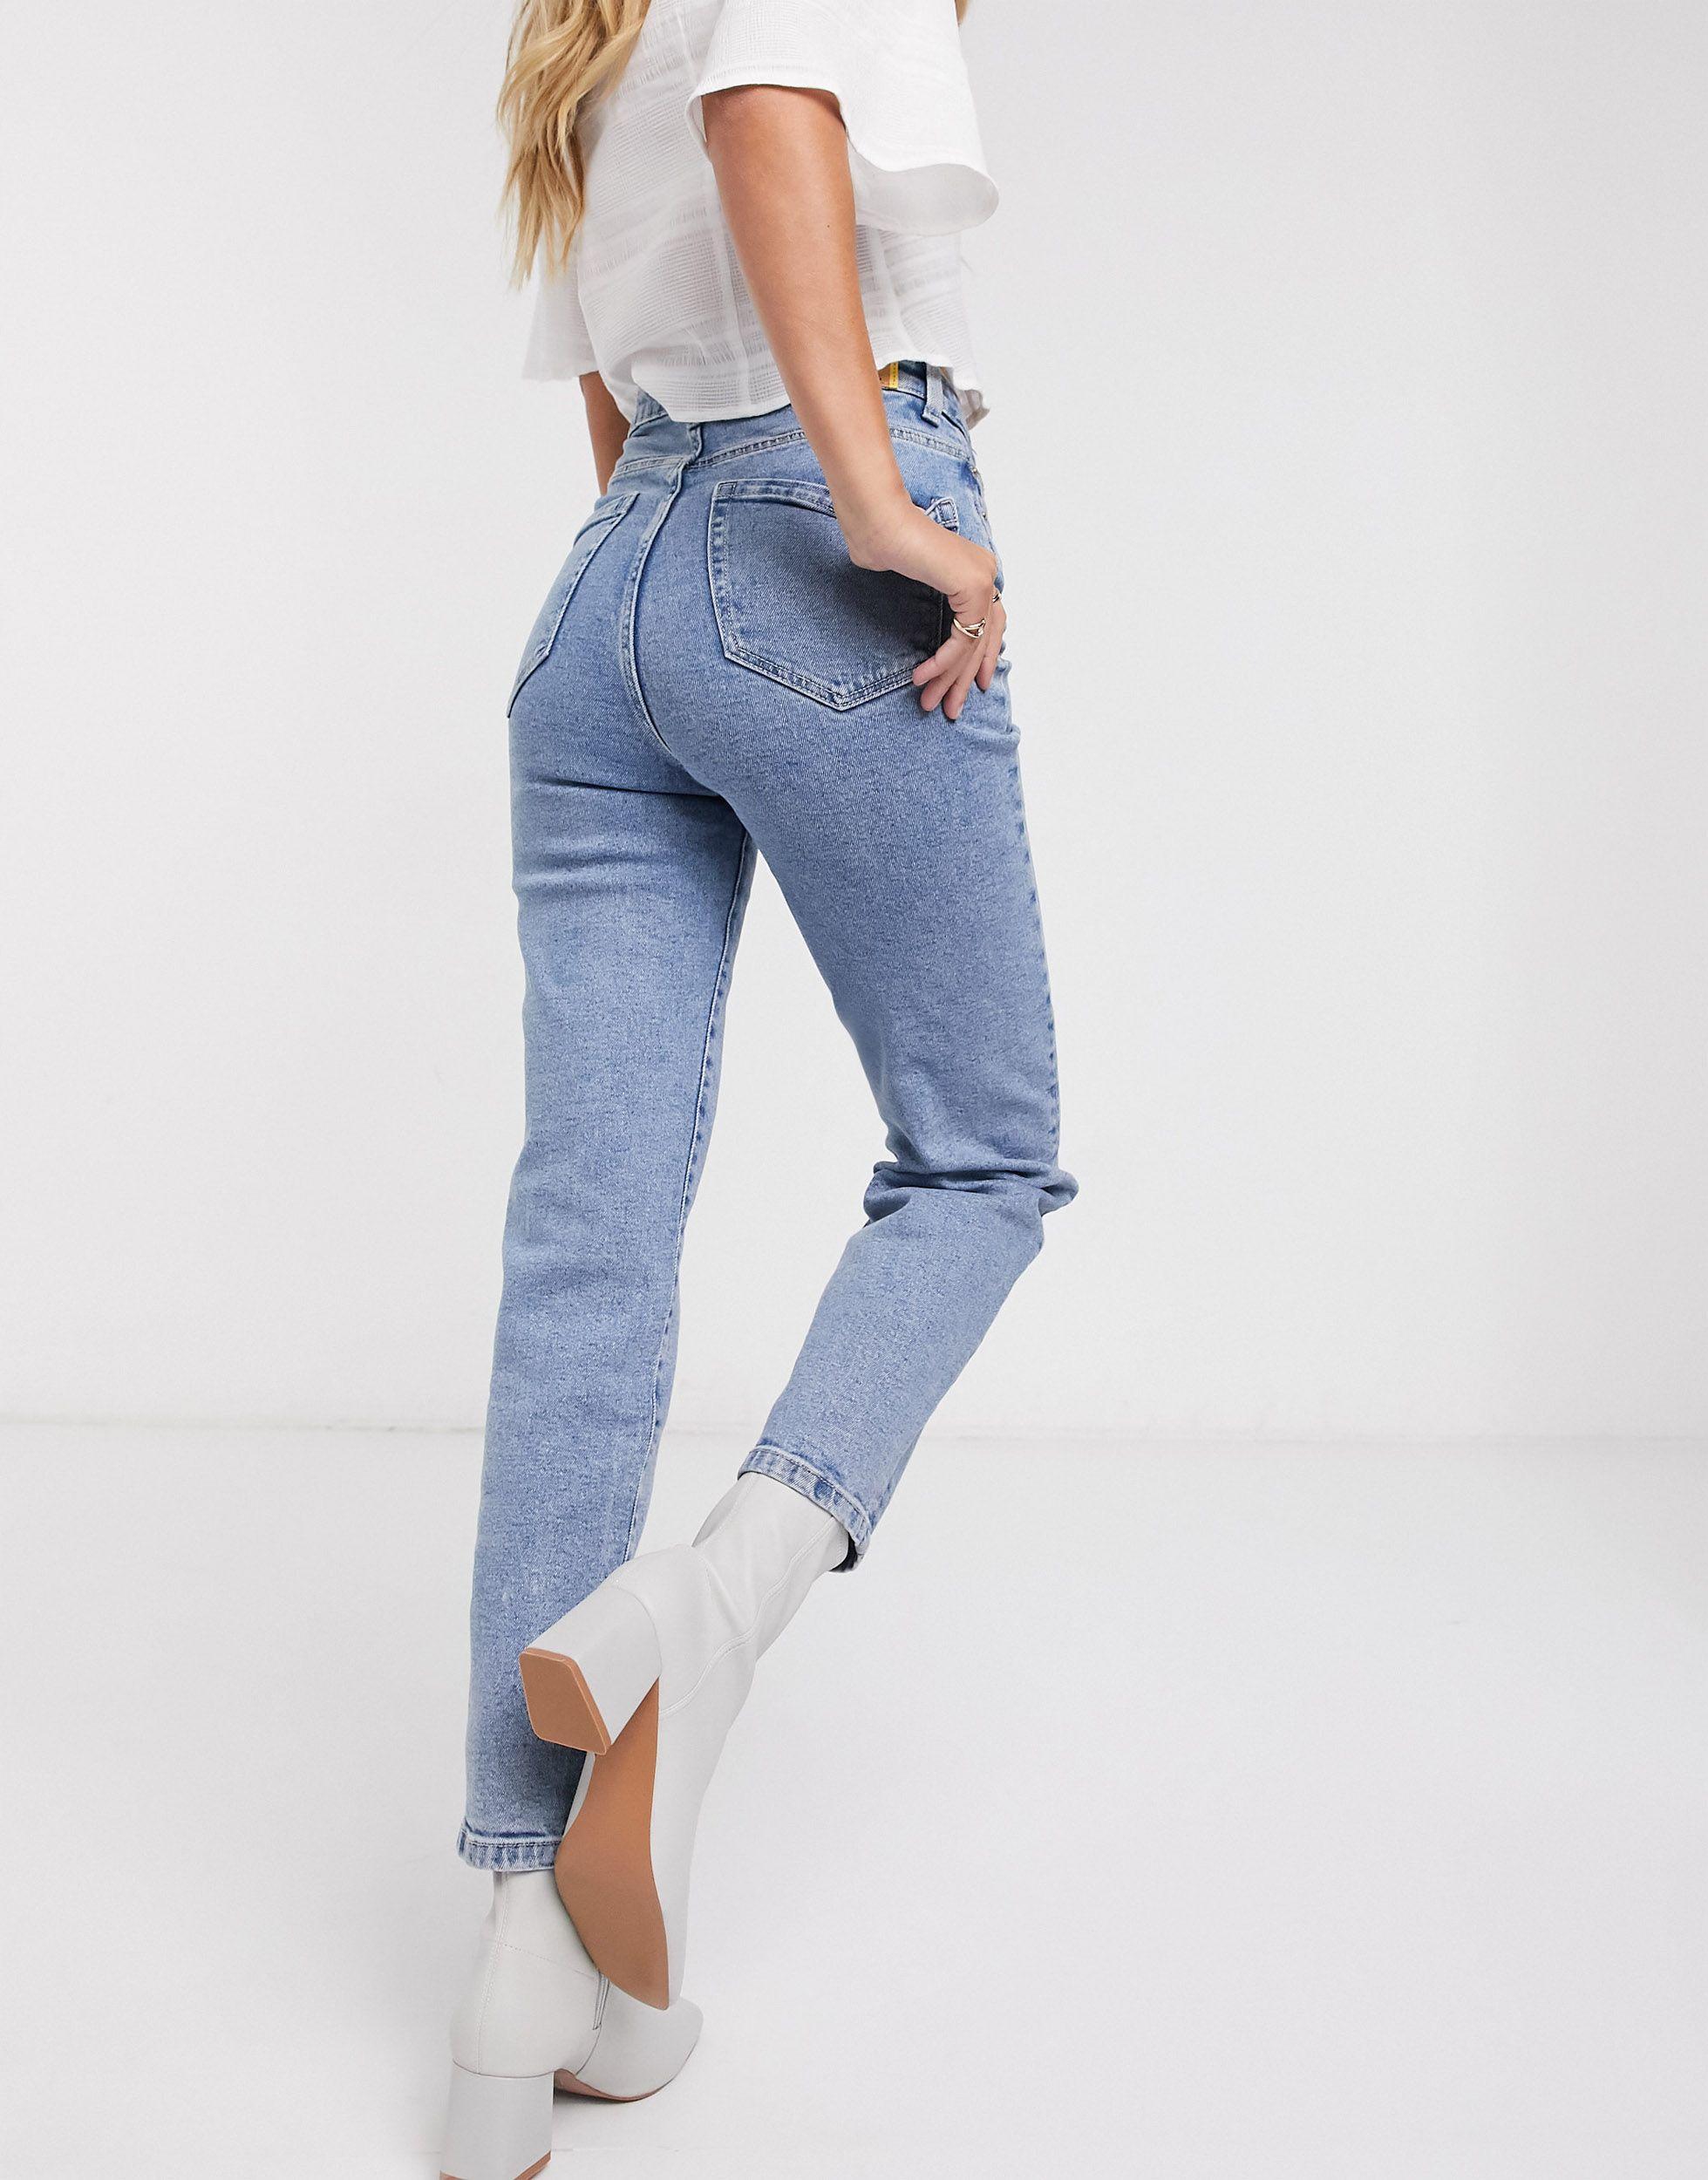 Navy Blue/Multicolored 40                  EU discount 94% Stradivarius shorts jeans WOMEN FASHION Jeans Print 